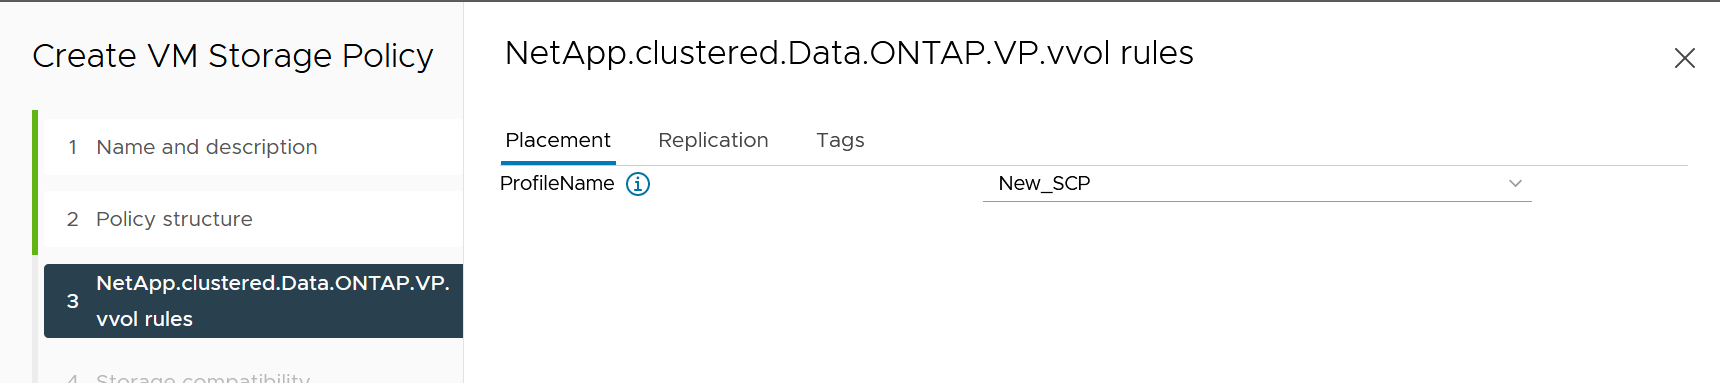 使用 ONTAP 工具建立 VM 儲存原則 VASA Provider 9.10"300